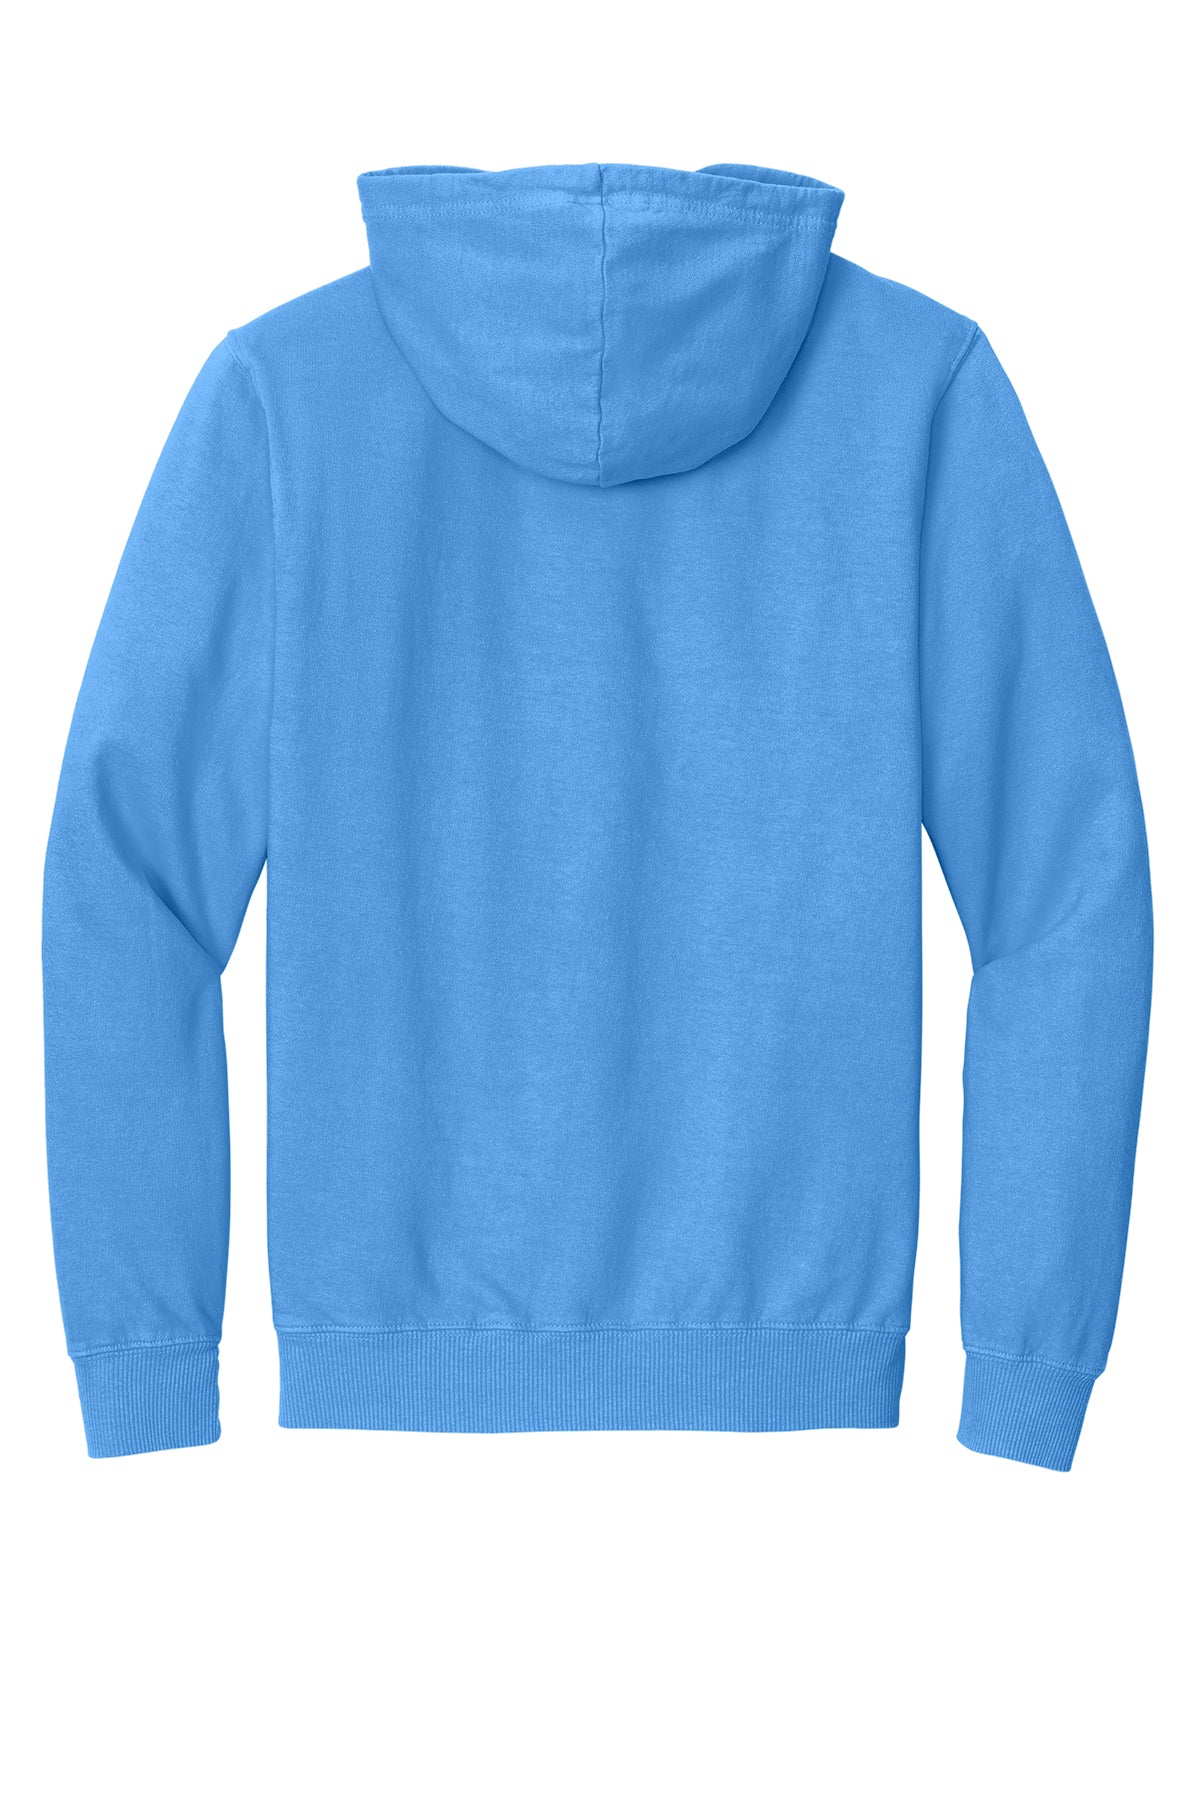 PC098H Port & Company® Beach Wash® Garment-Dyed Pullover Hooded Sweatshirt-S-4XL